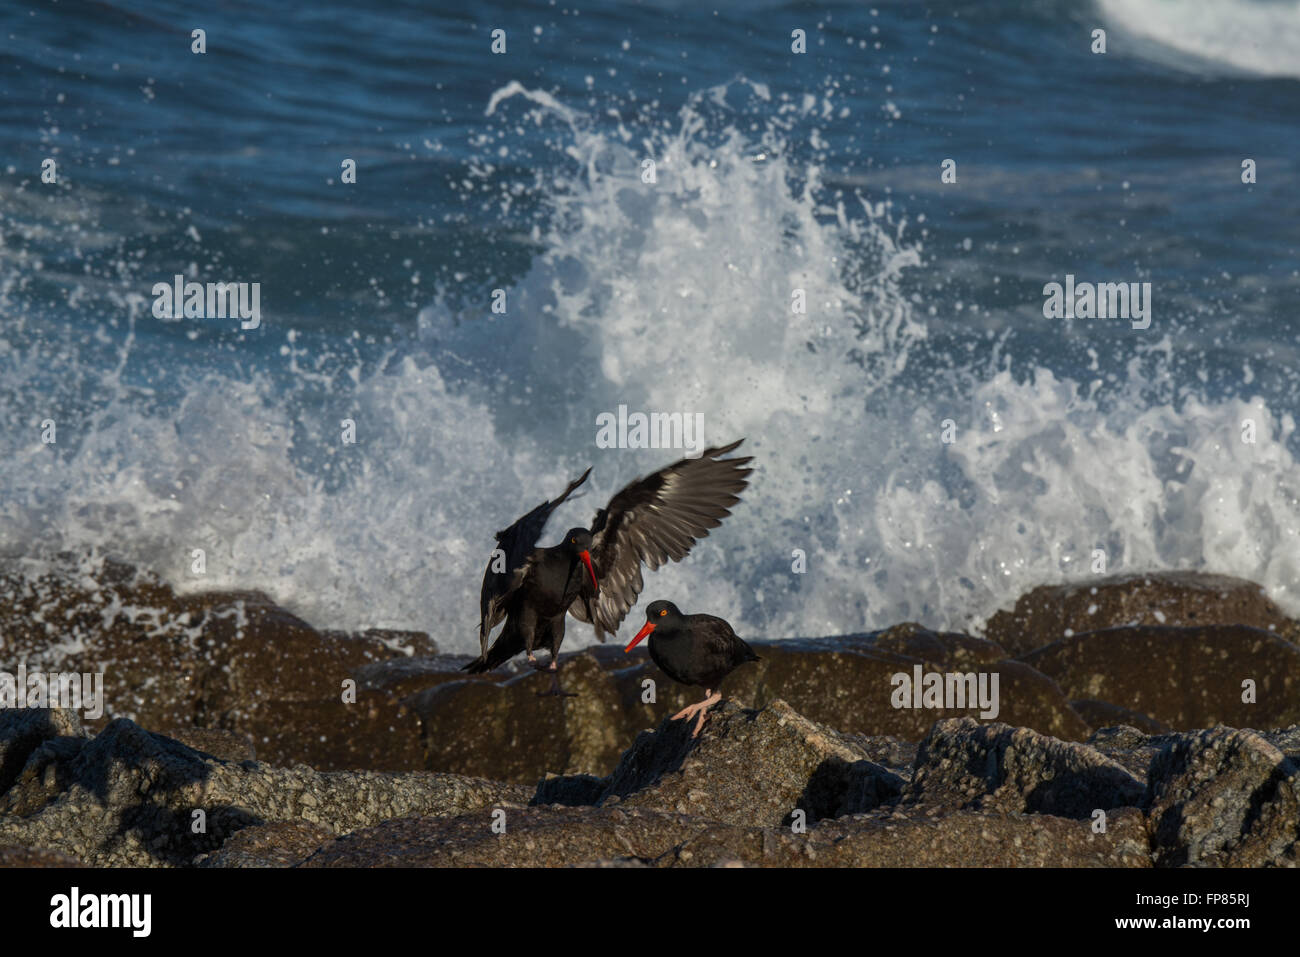 A black oystercatcher, Haematopus bachmani, flying away from wave spray along the California coast. Stock Photo